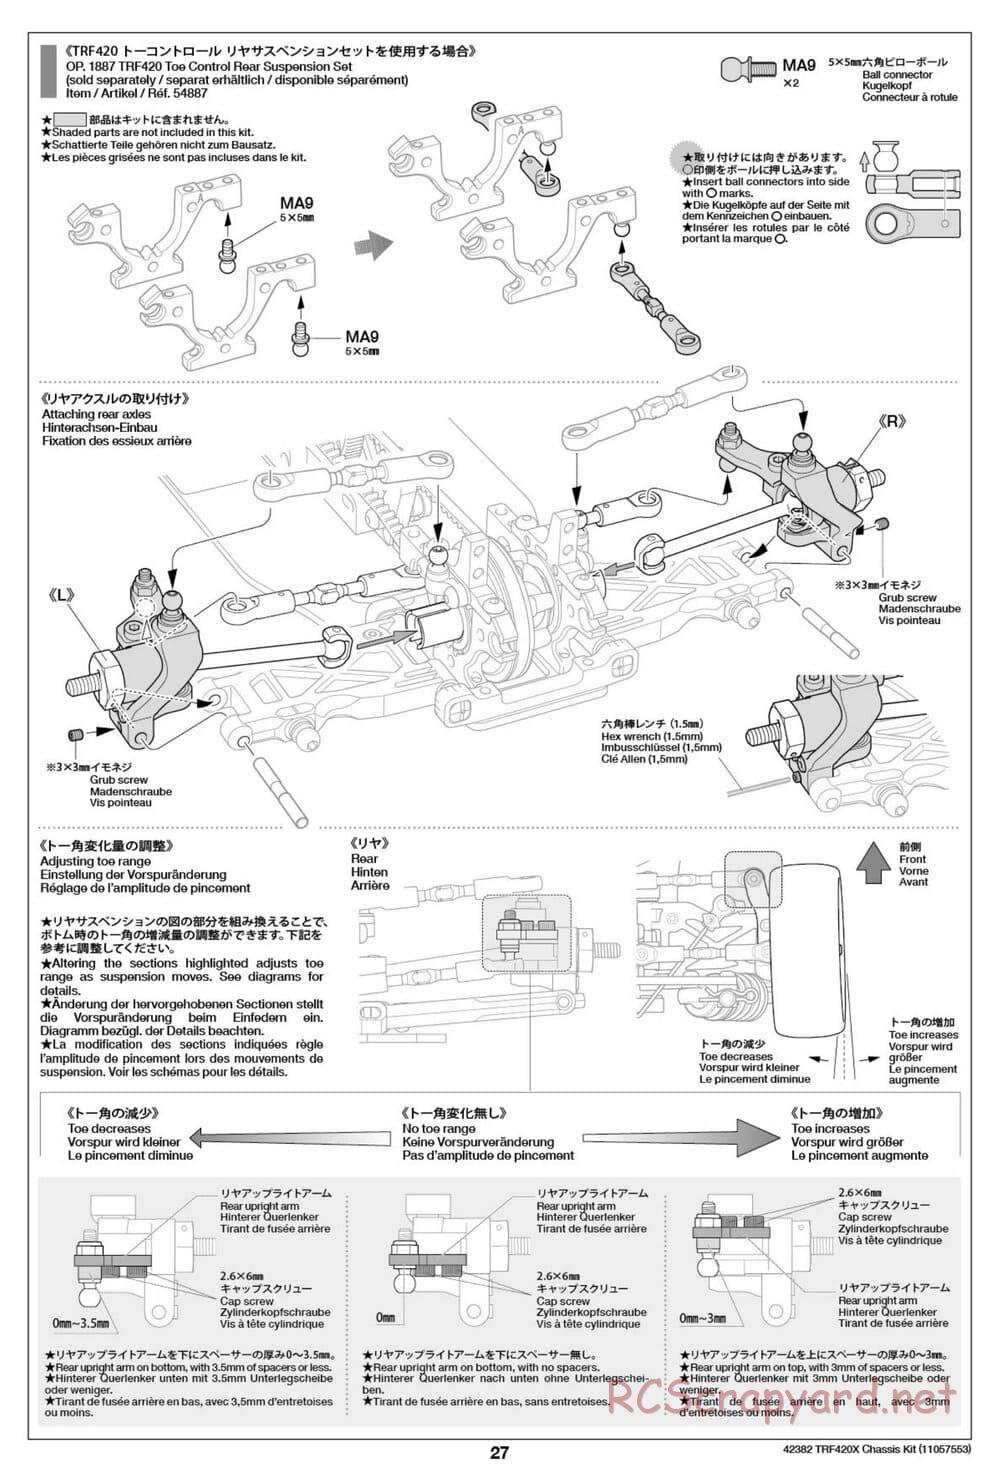 Tamiya - TRF420X Chassis - Manual - Page 27